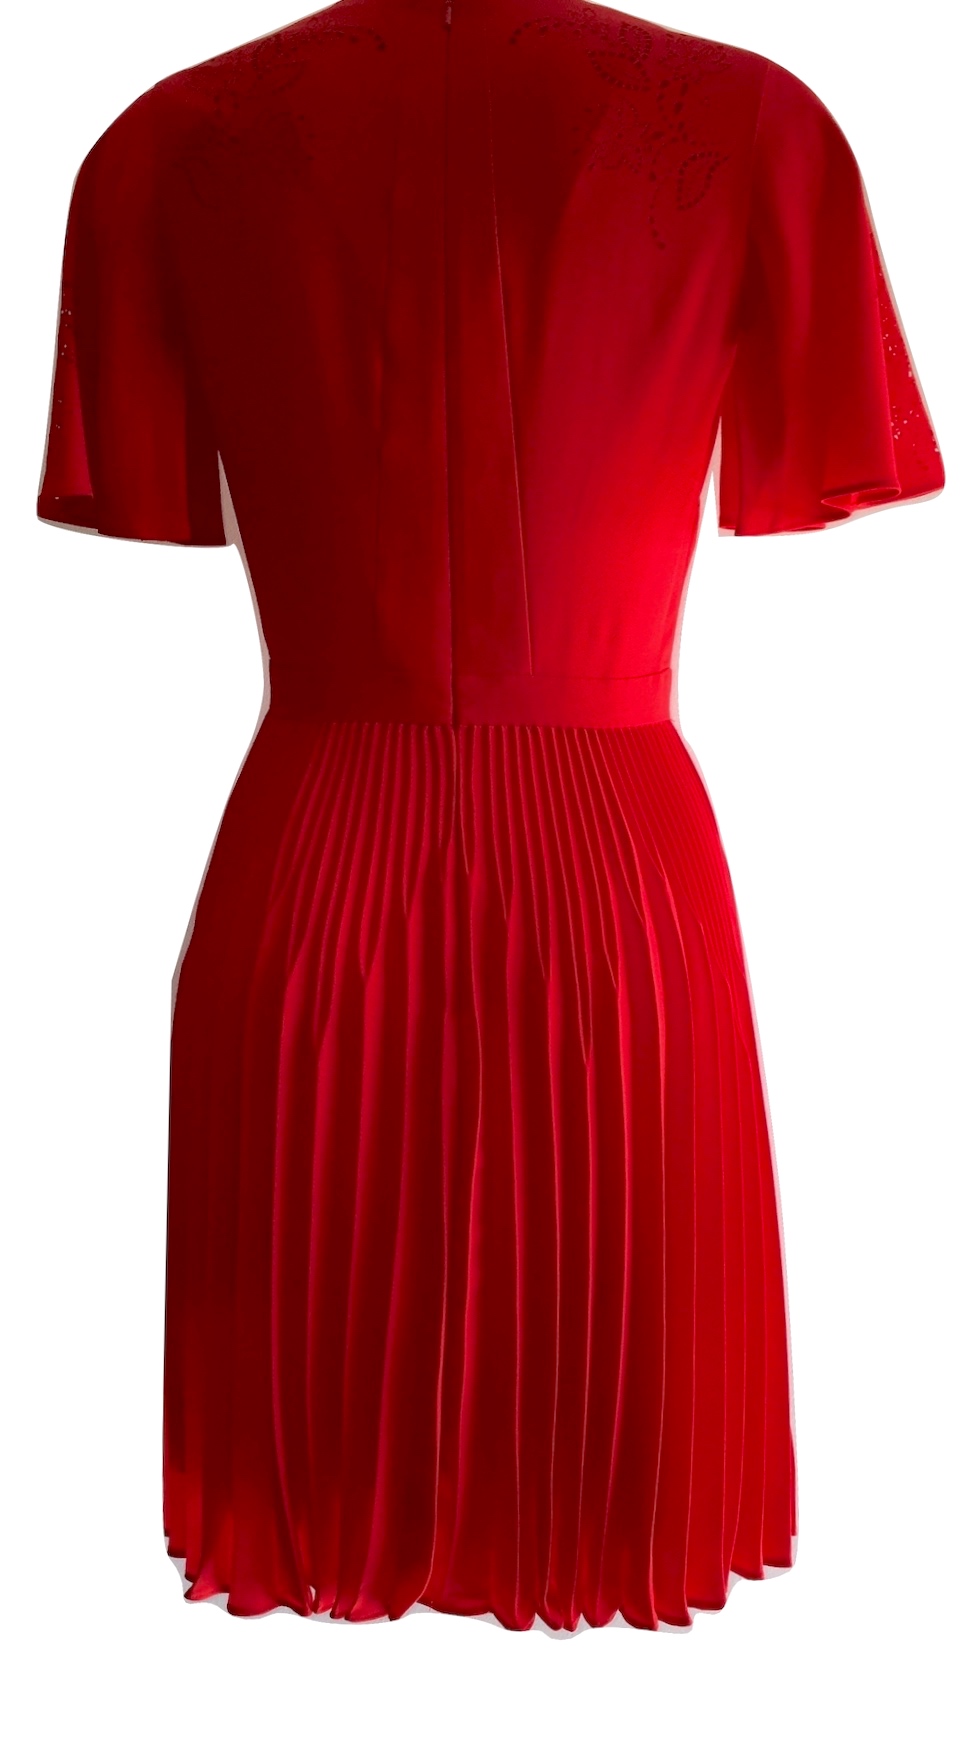 Karen Millen Laser Out Pleated Red Dress